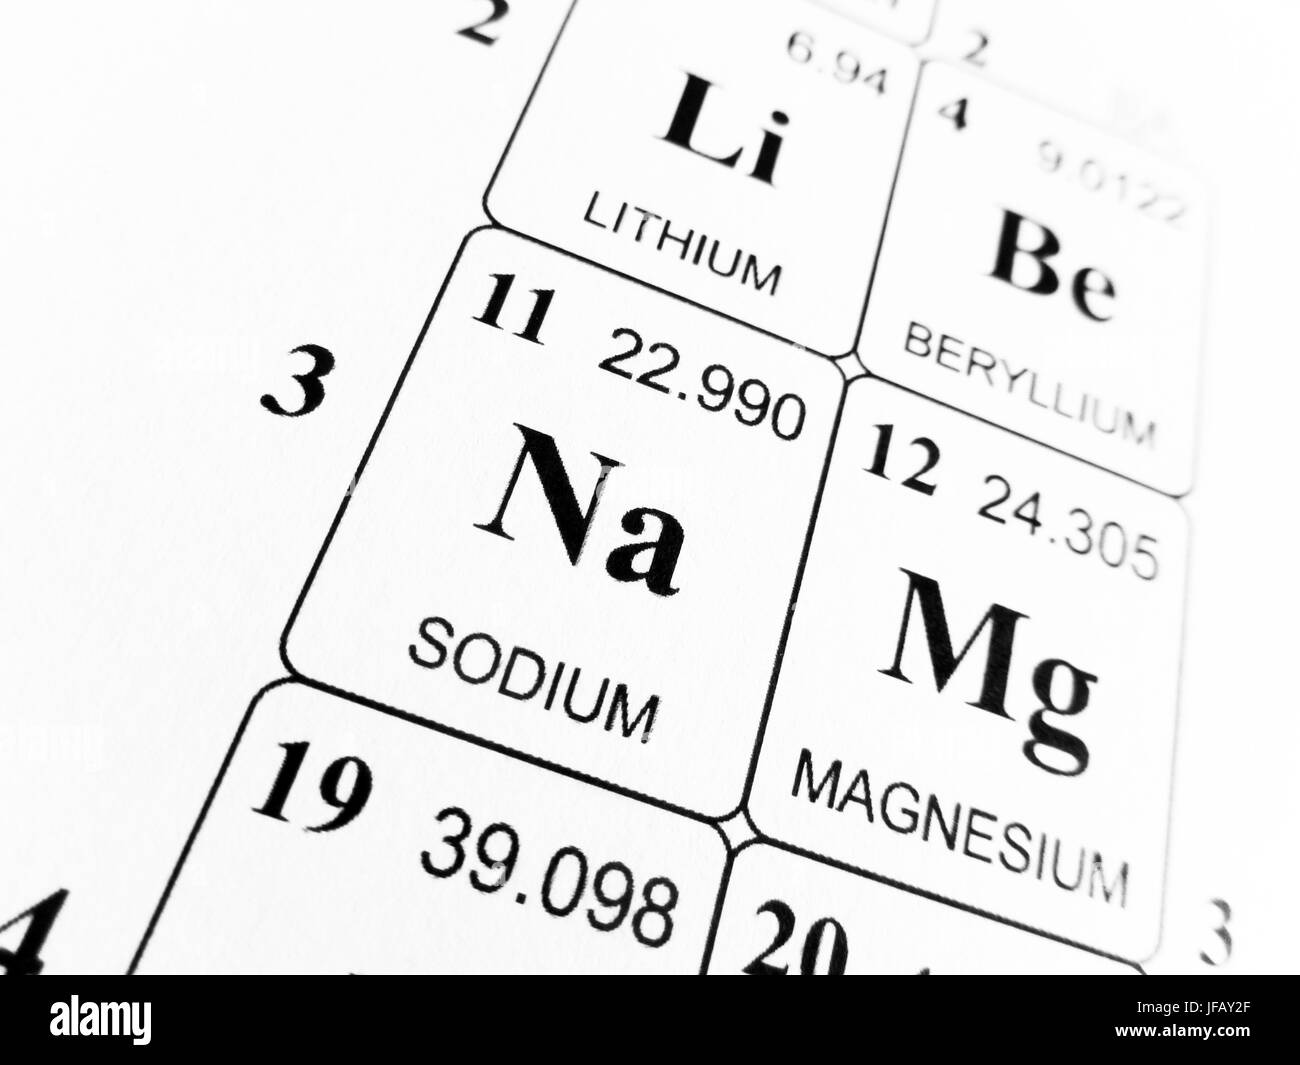 Relative atomic mass of sodium chloride